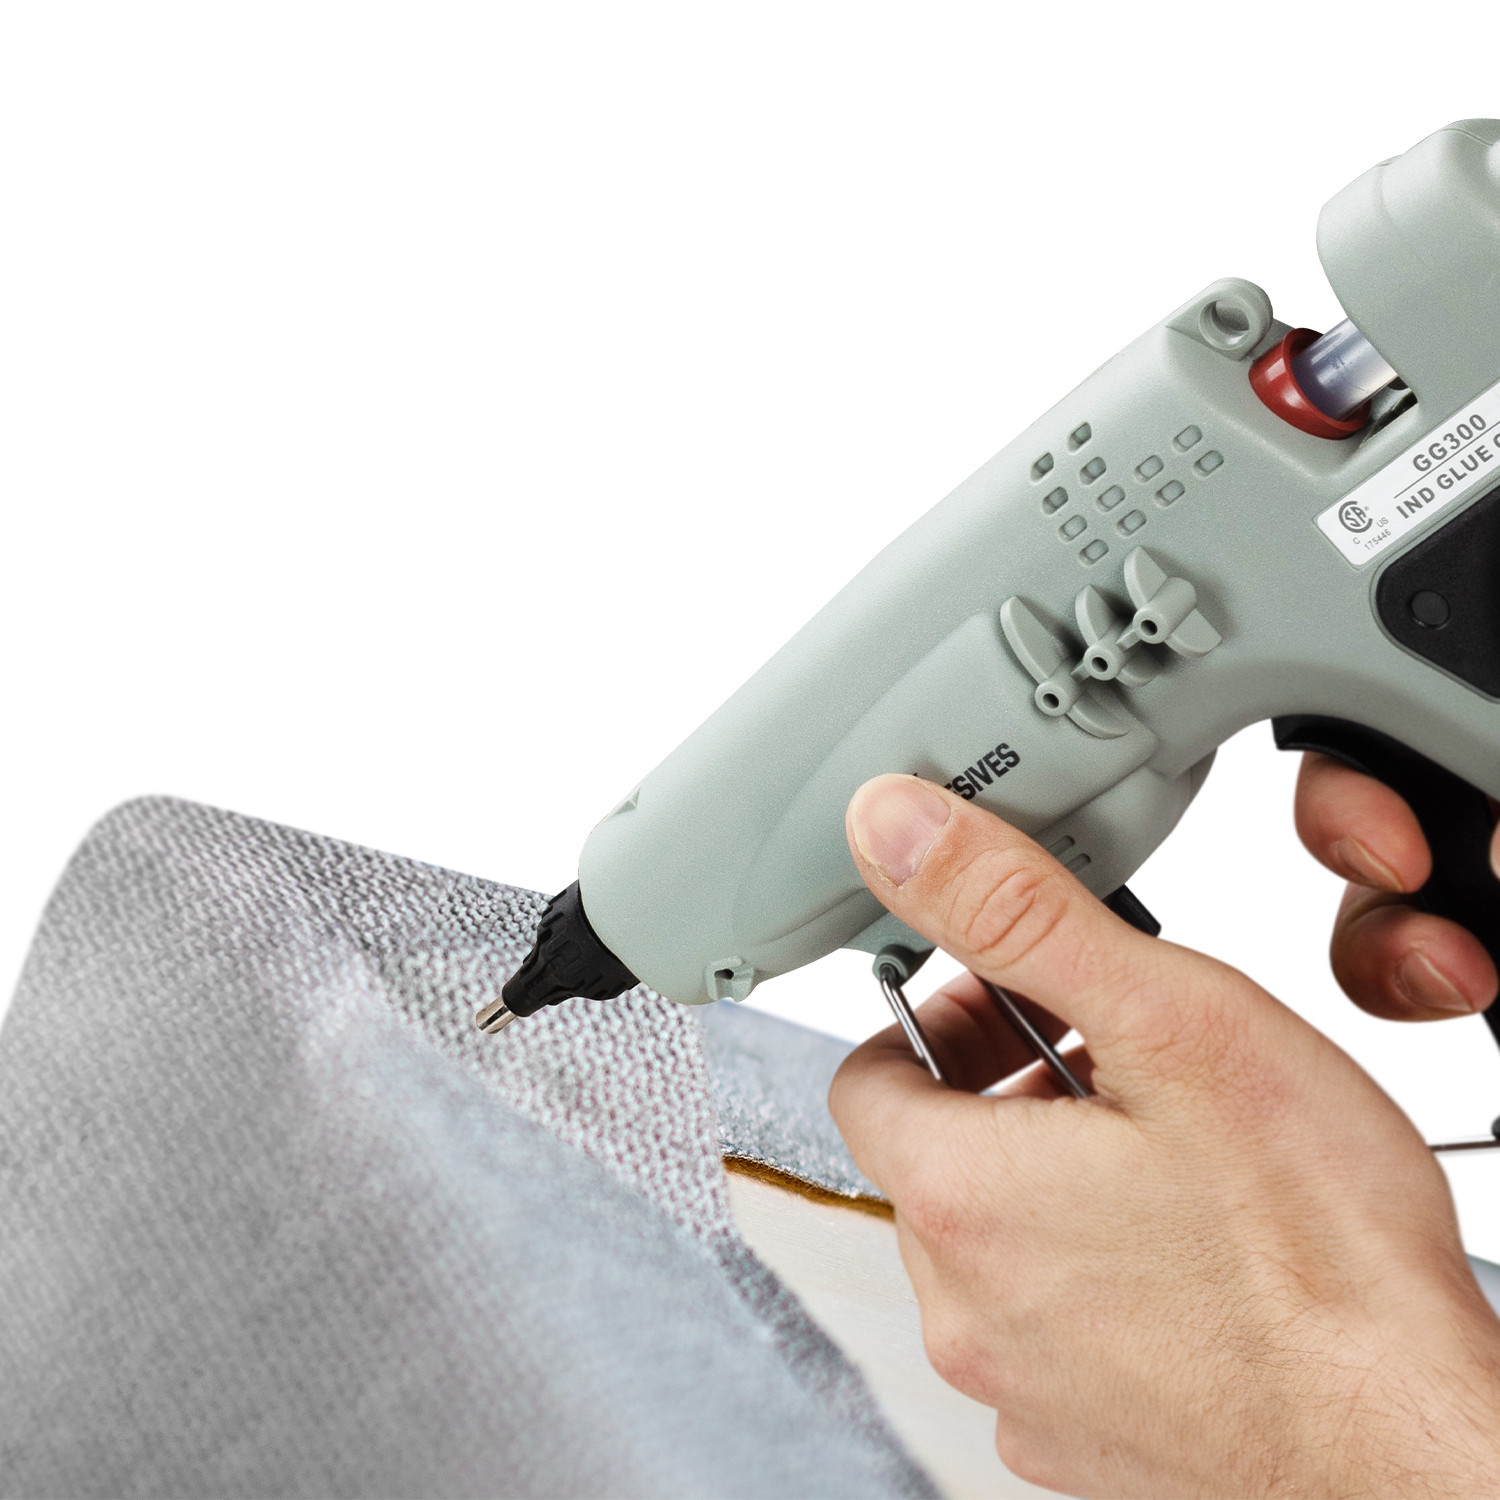 GG-300 Industrial 300W Full Size Hot Glue Gun for 1/2 Glue Sticks